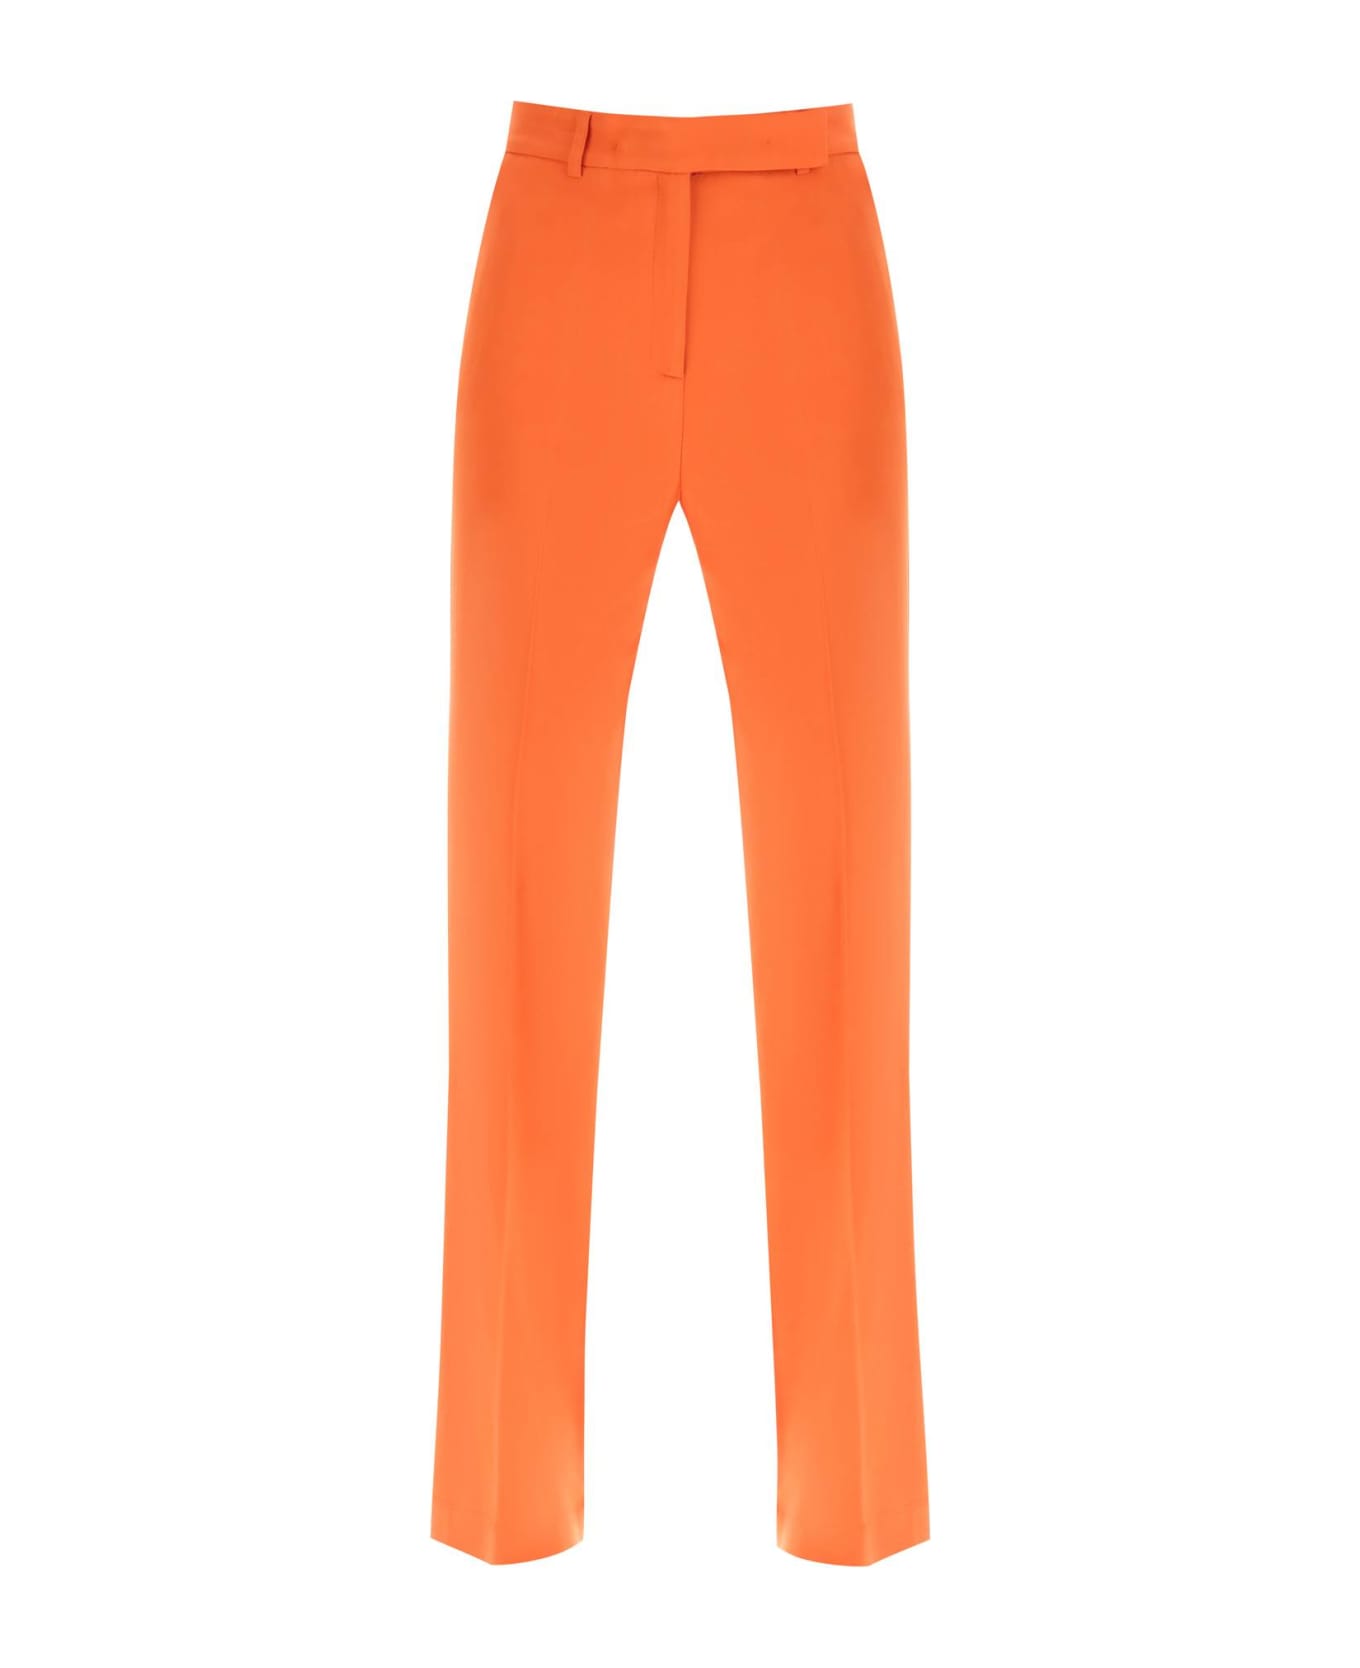 Hebe Studio 'lover' Canvas faille Trousers - ORANGE (Orange)